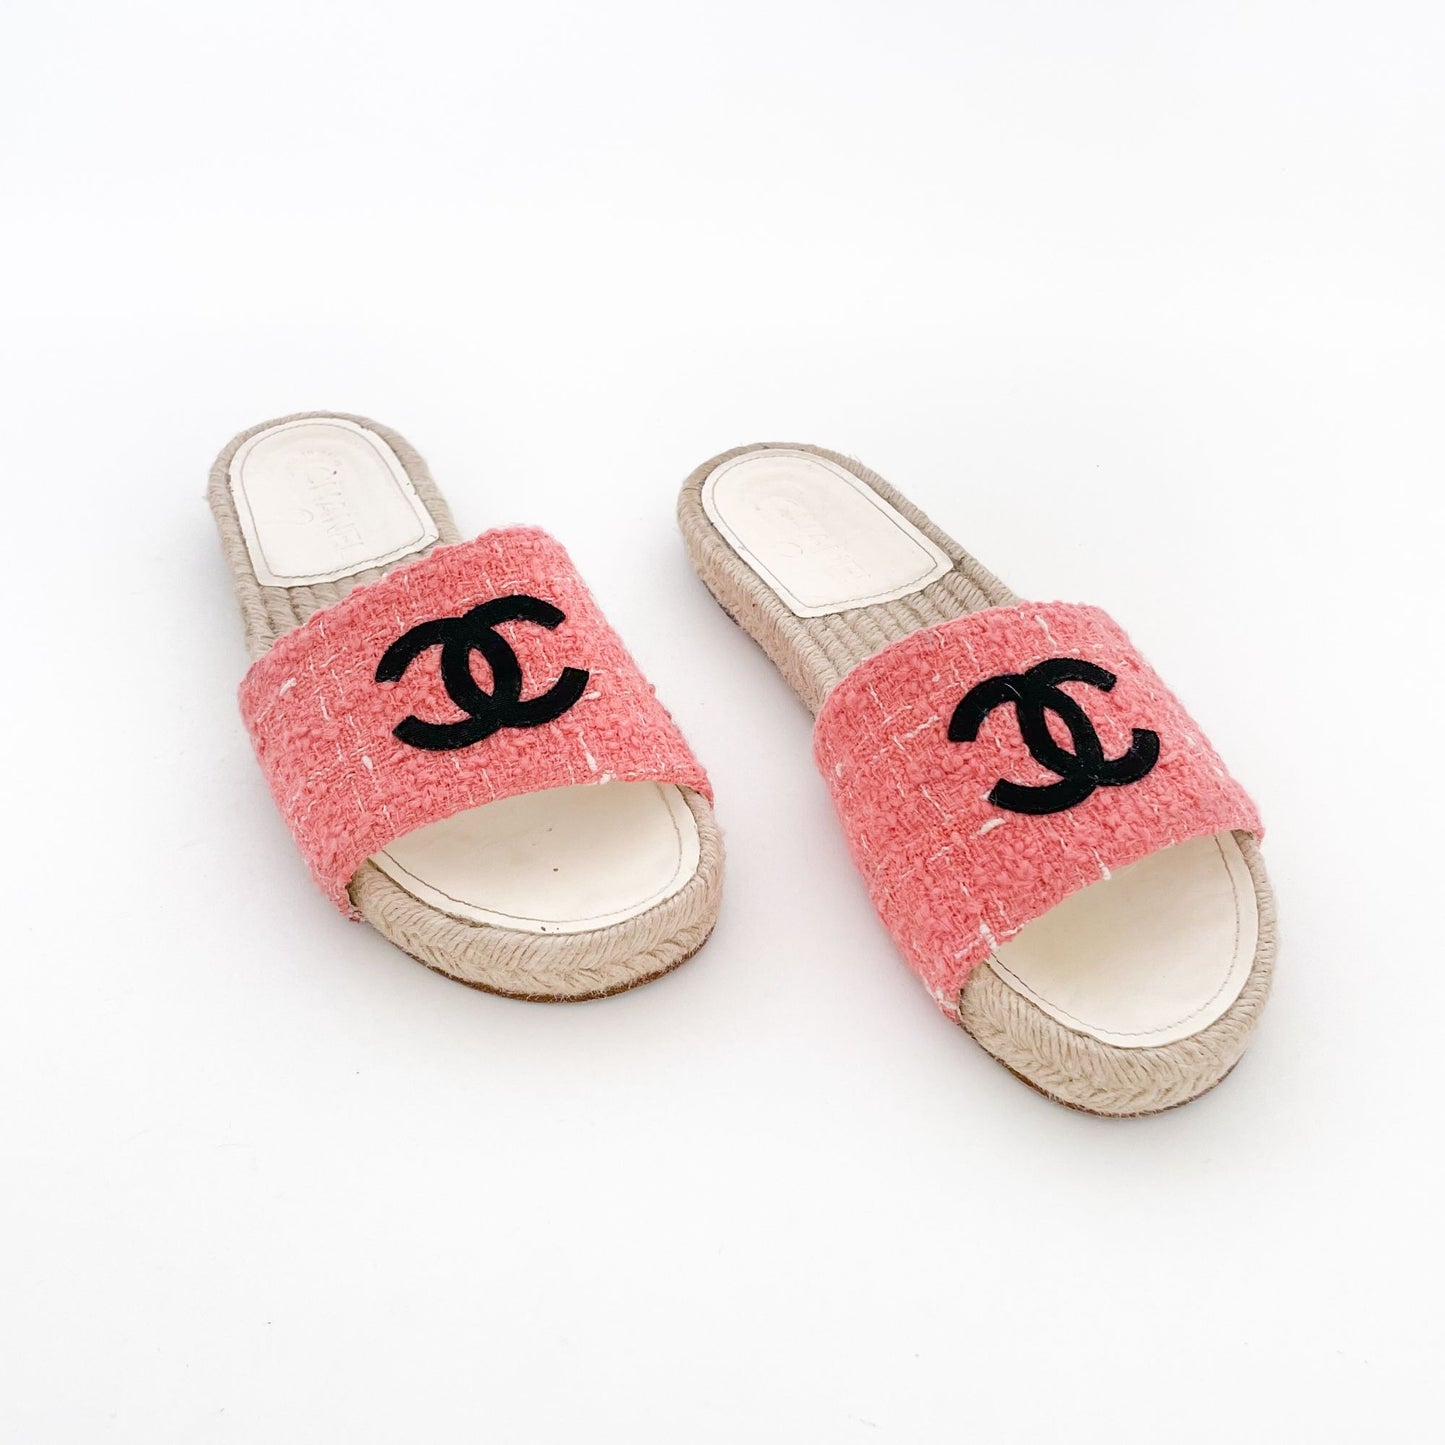 Chanel CC Espadrille Slide Sandals in Pink Tweed Size 40